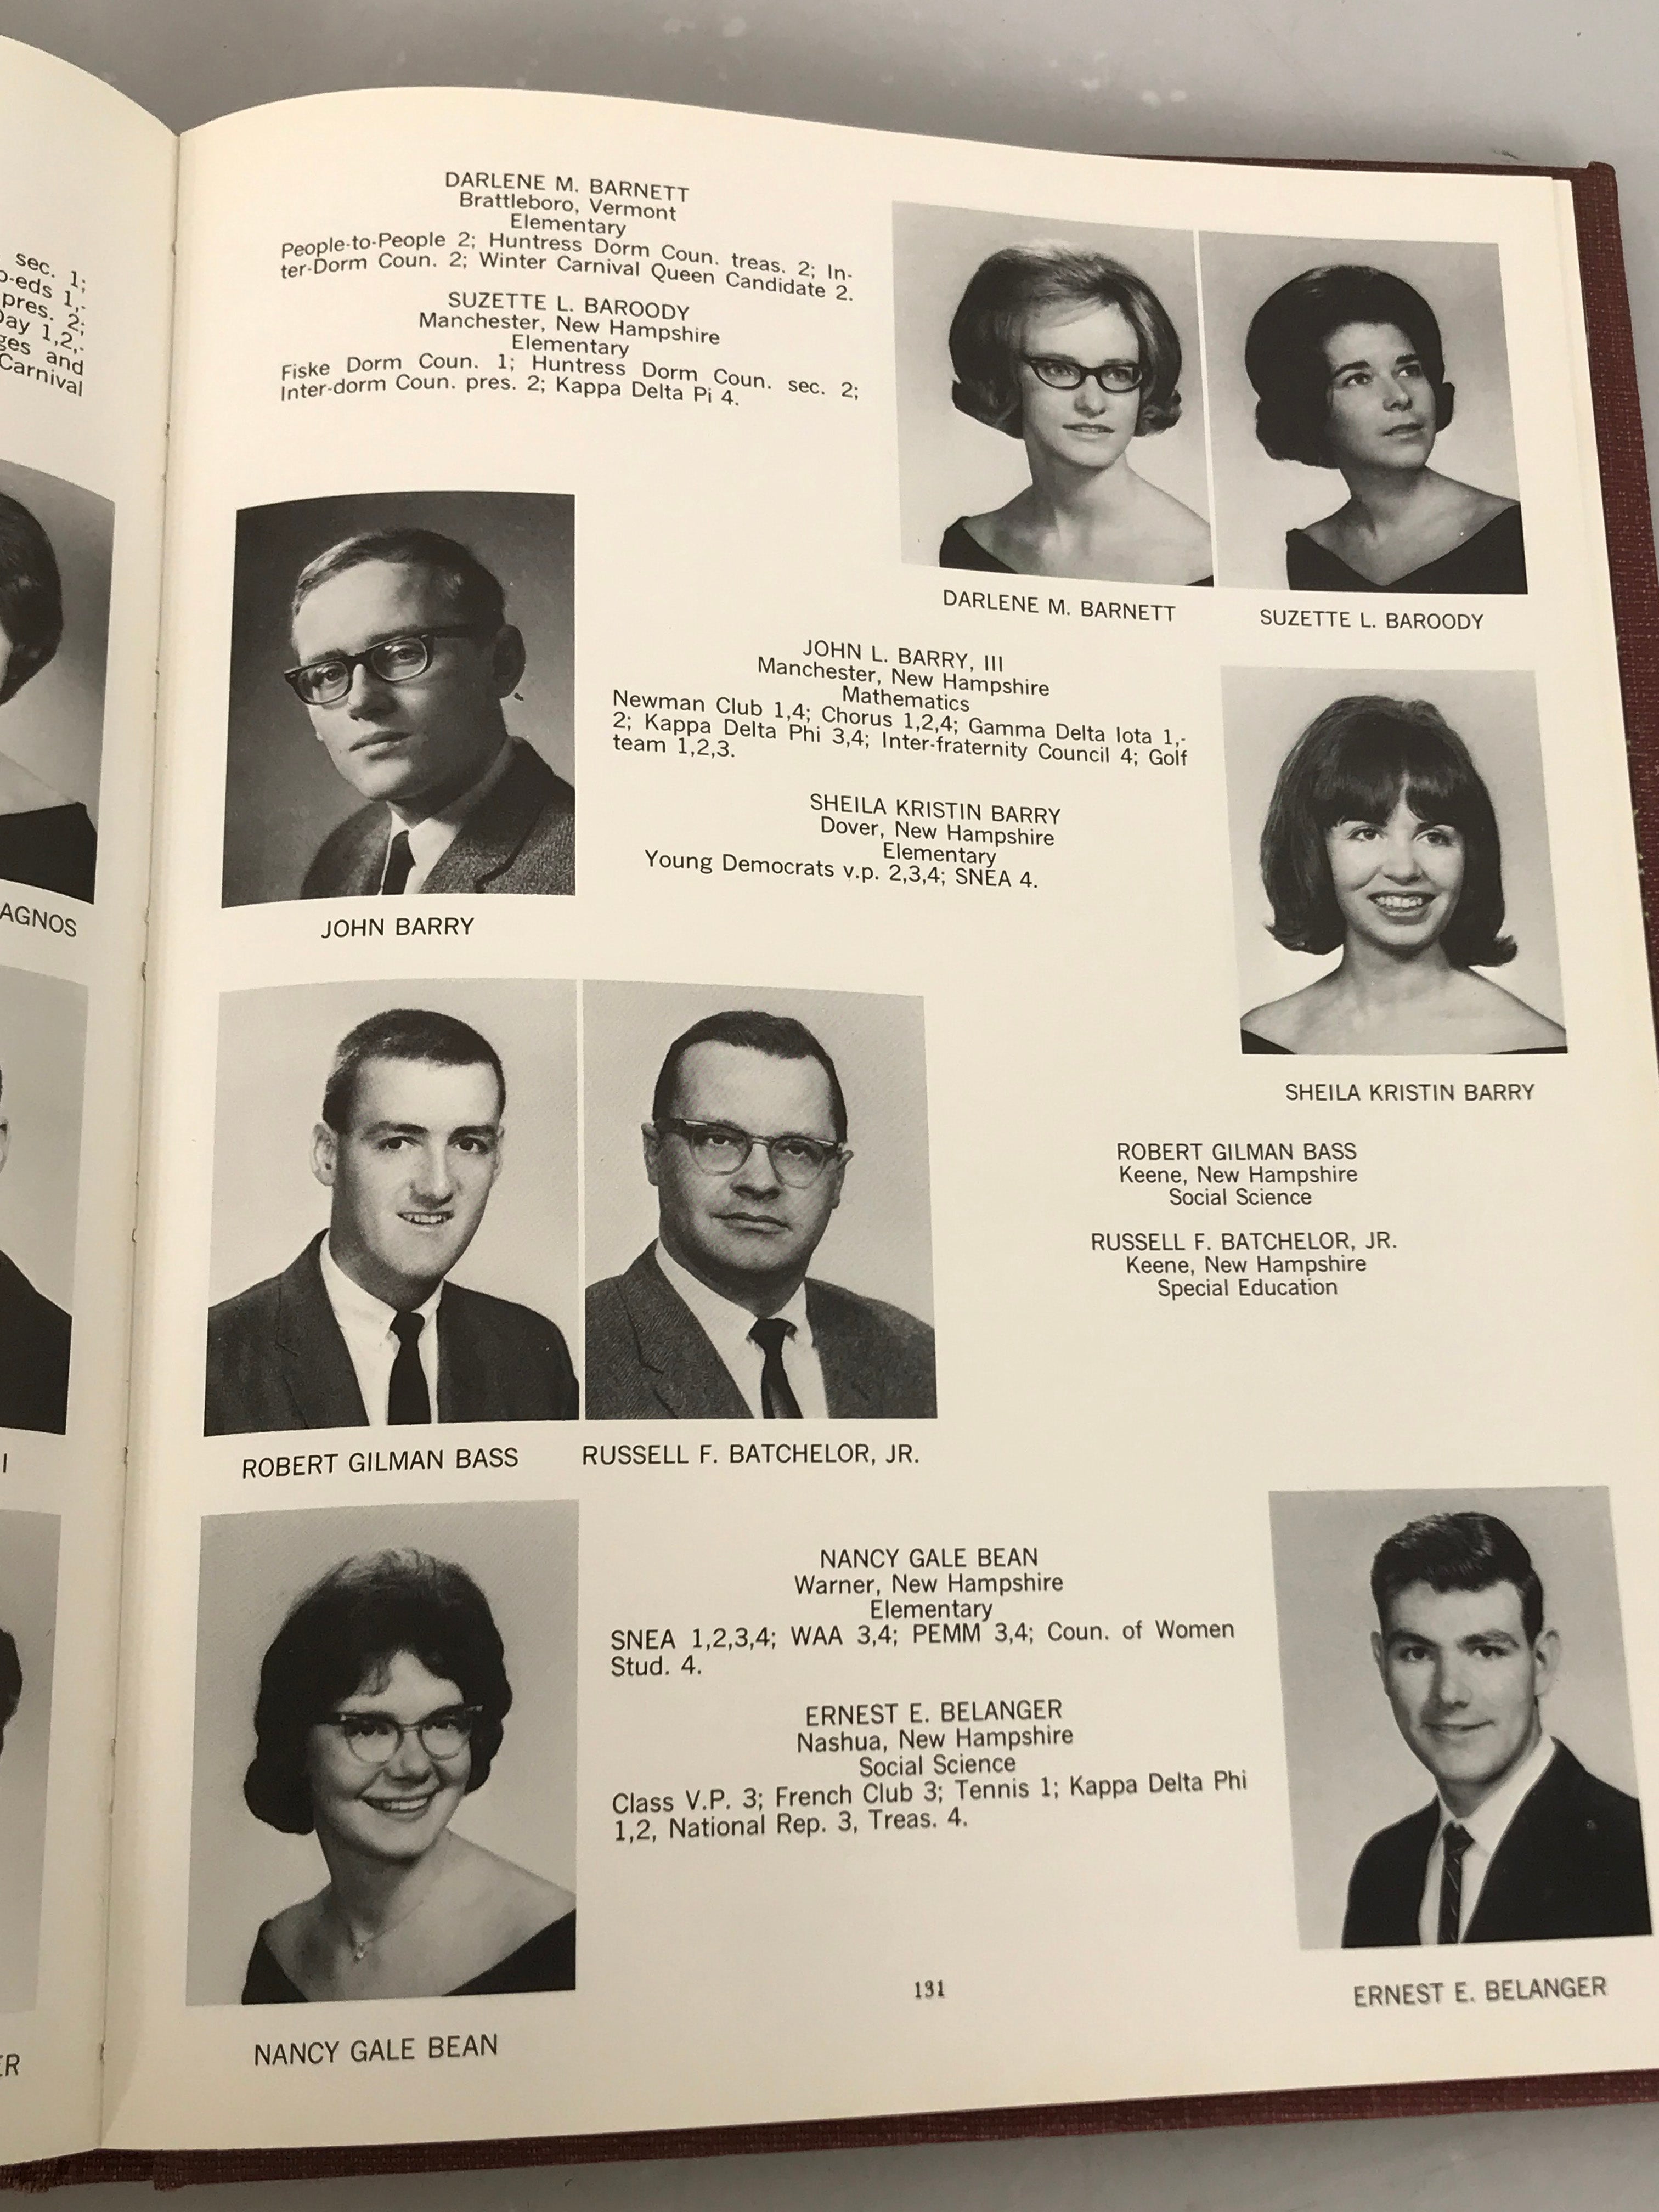 1965 Keene State College Yearbook Keene New Hampshire HC